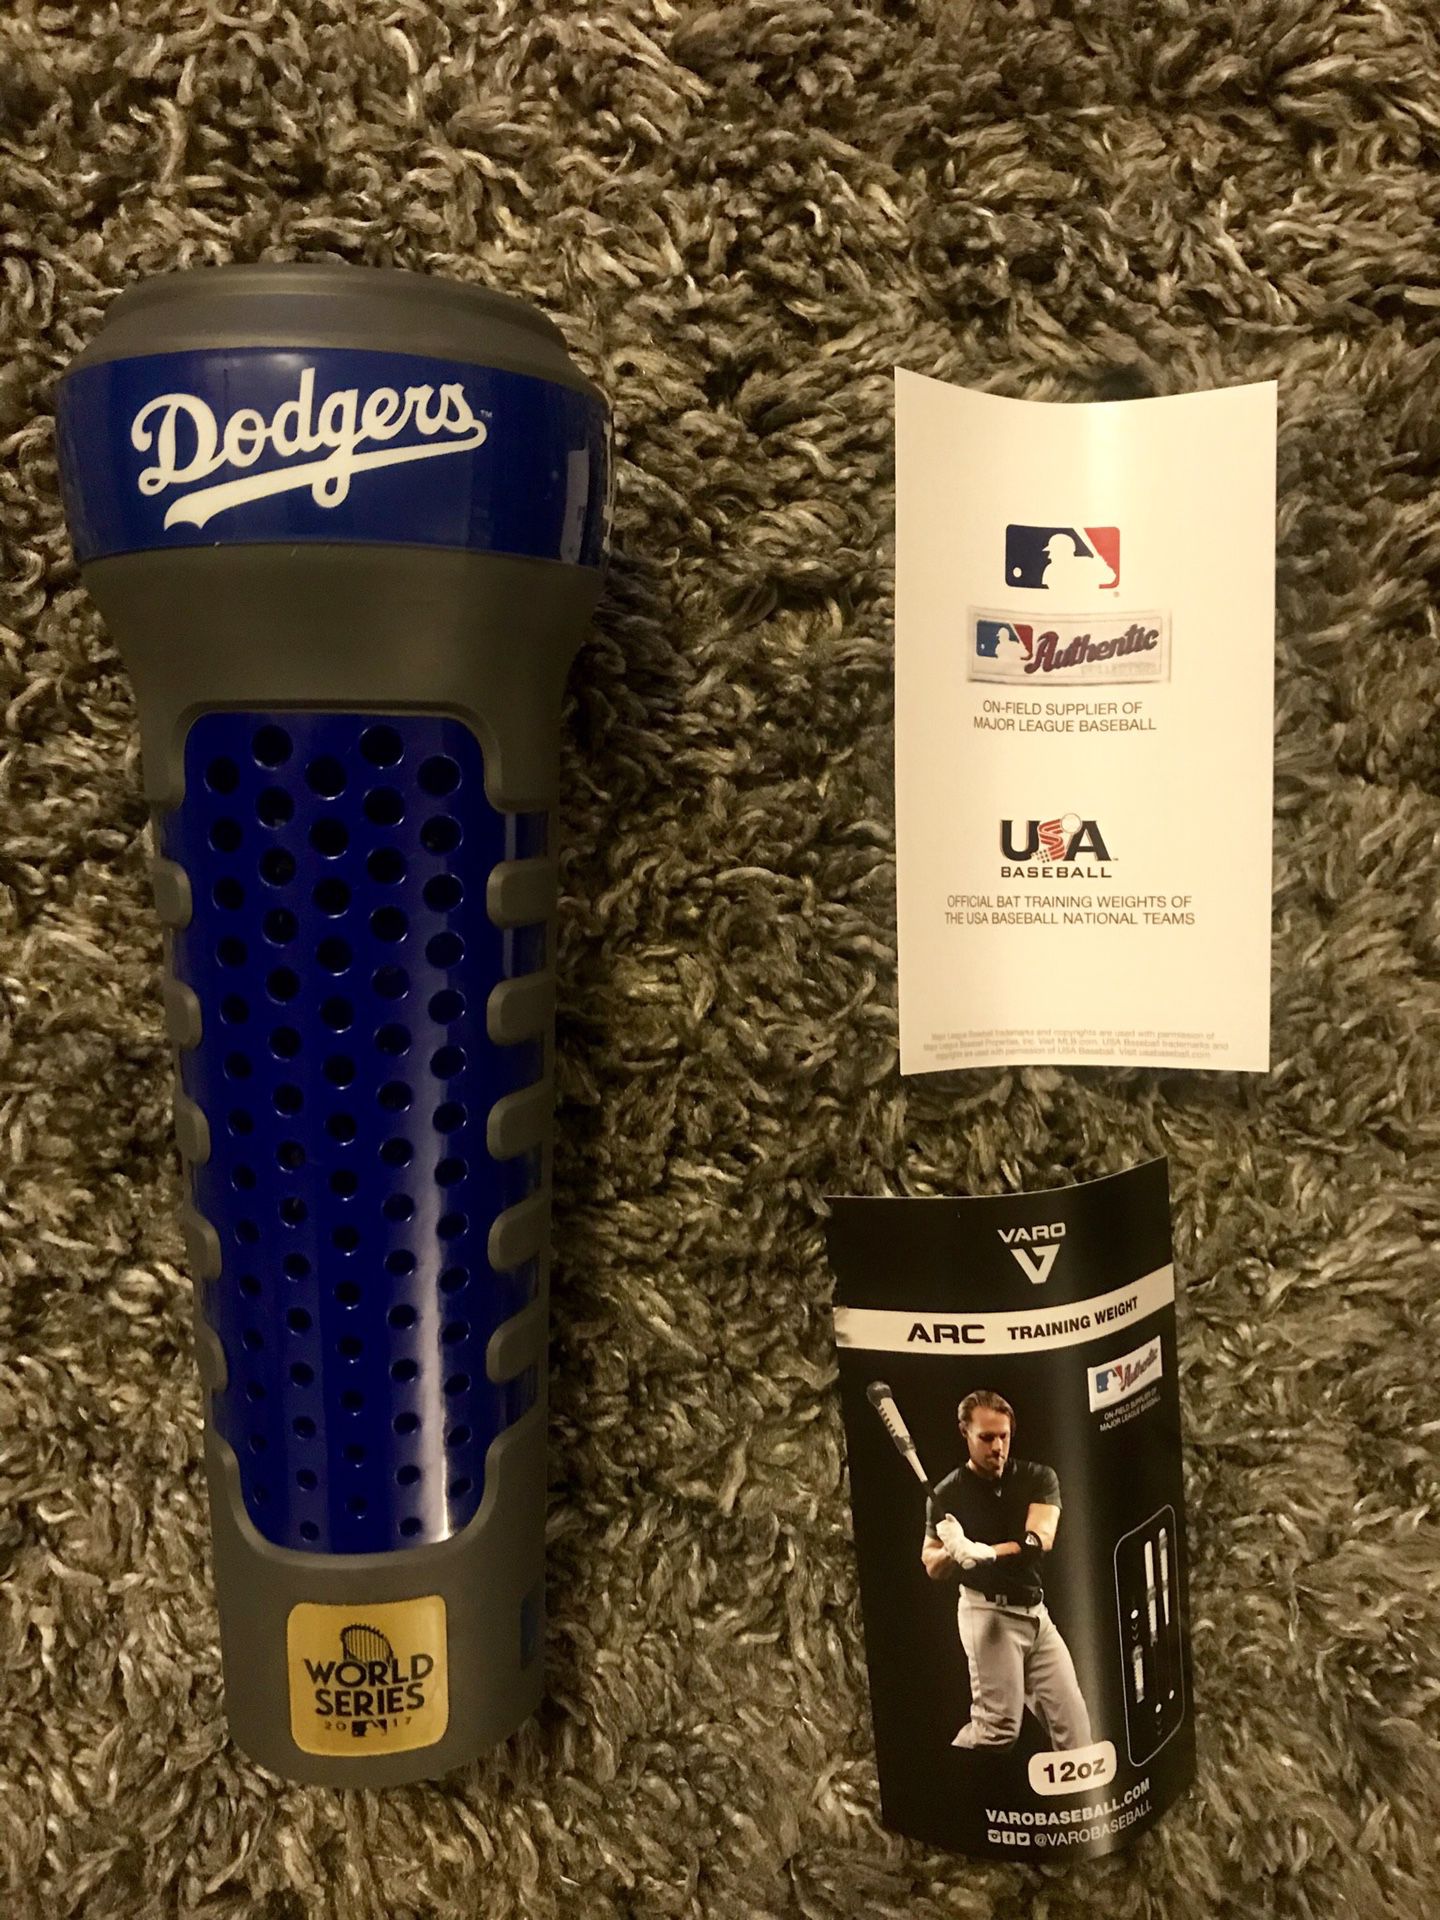 NEW DODGERS varo baseball bat weight -limited edition - World Series